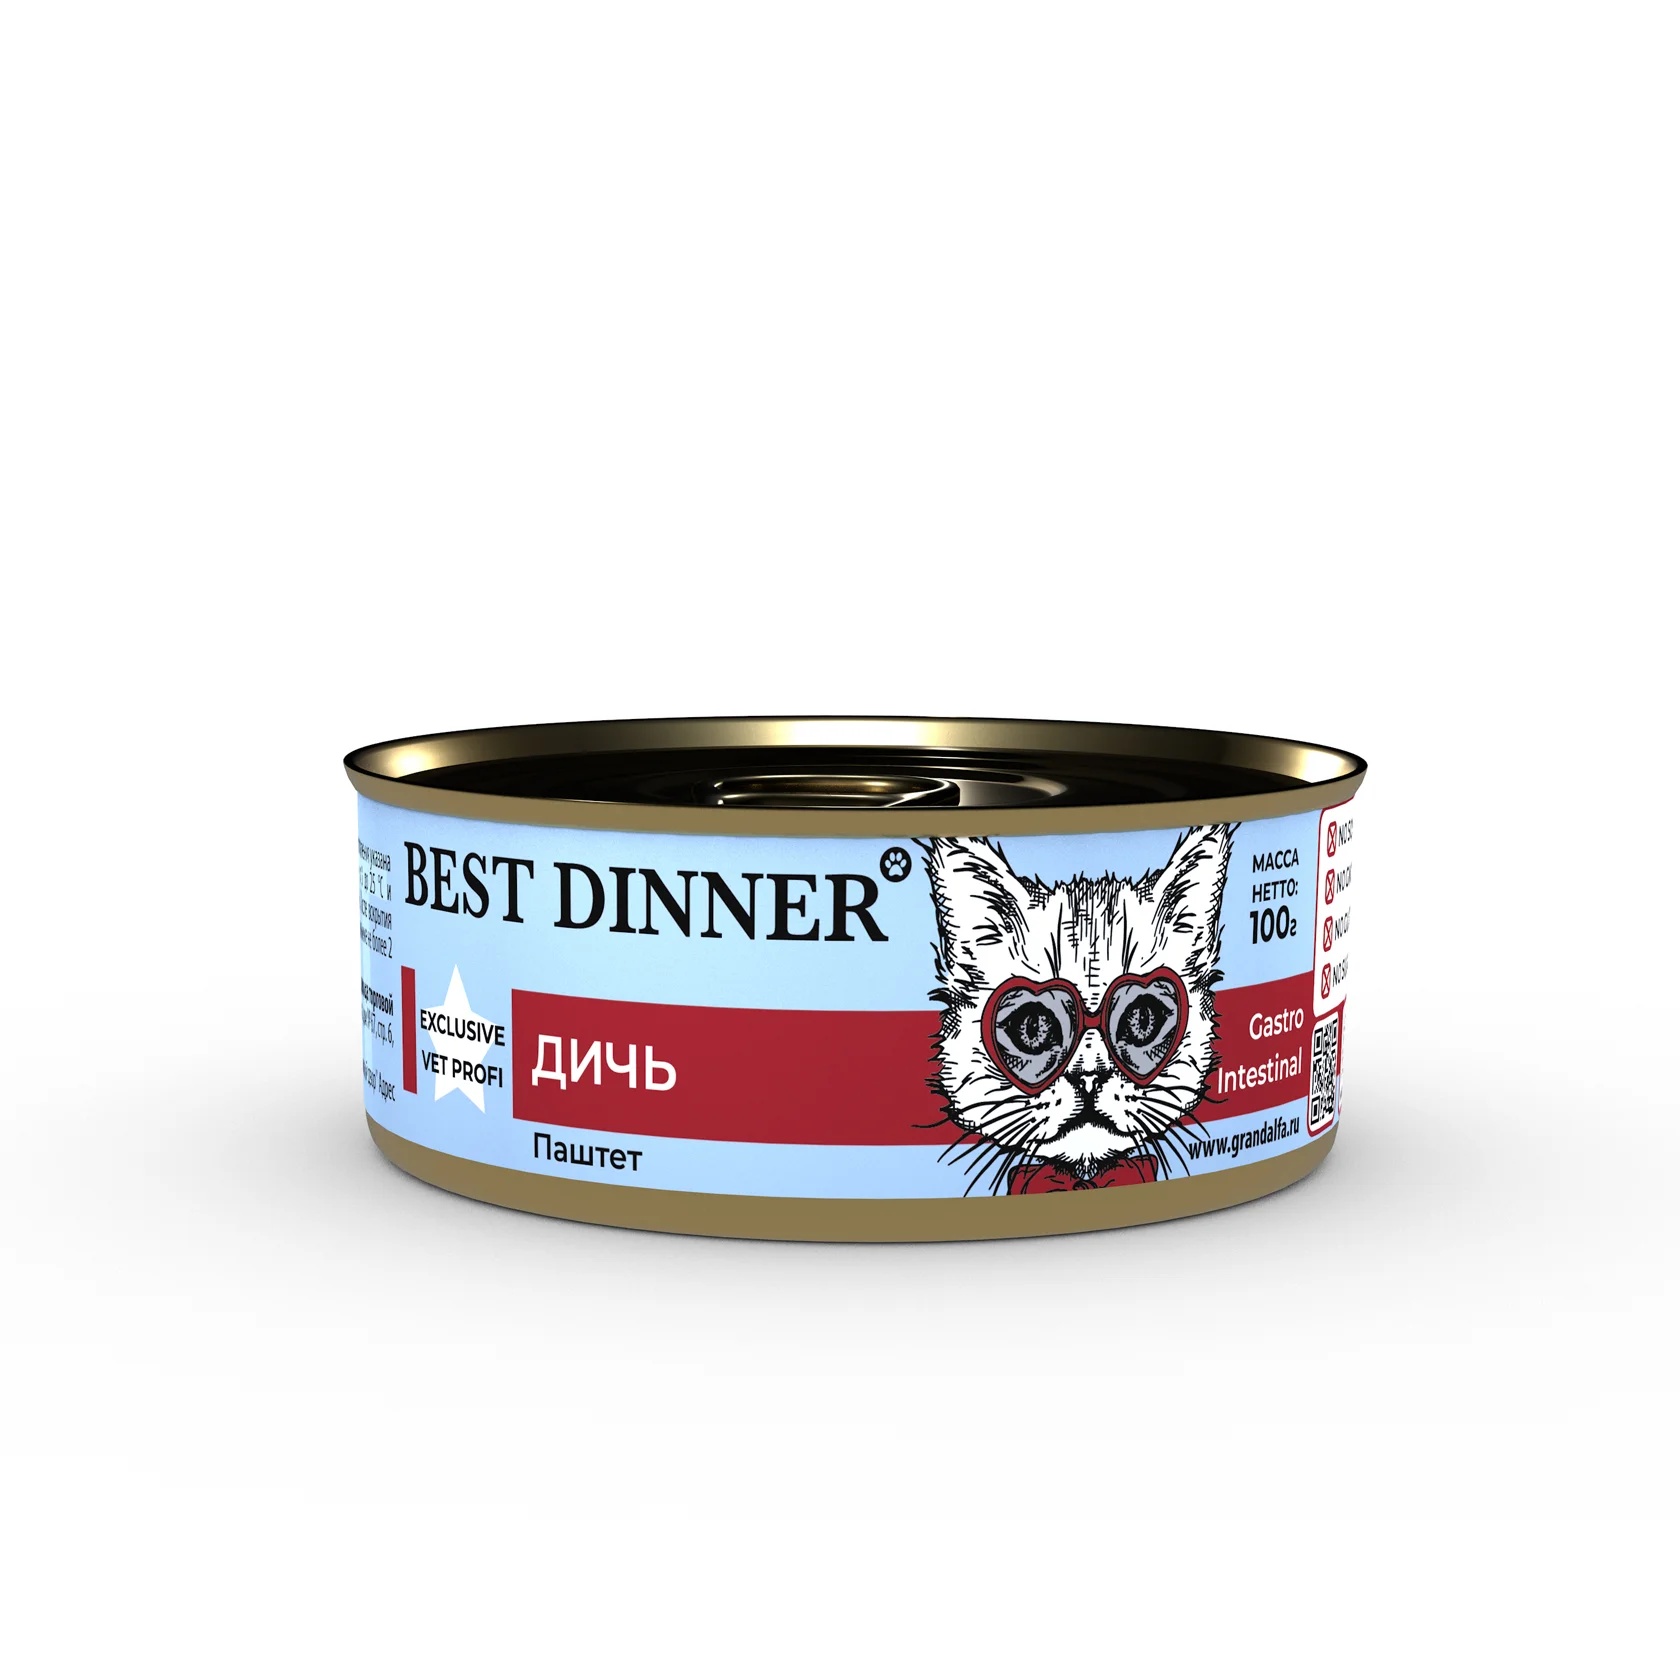 Best Dinner Exclusive Vet Profi Gastro Intestinal Дичь паштет конс для кошек 100 г